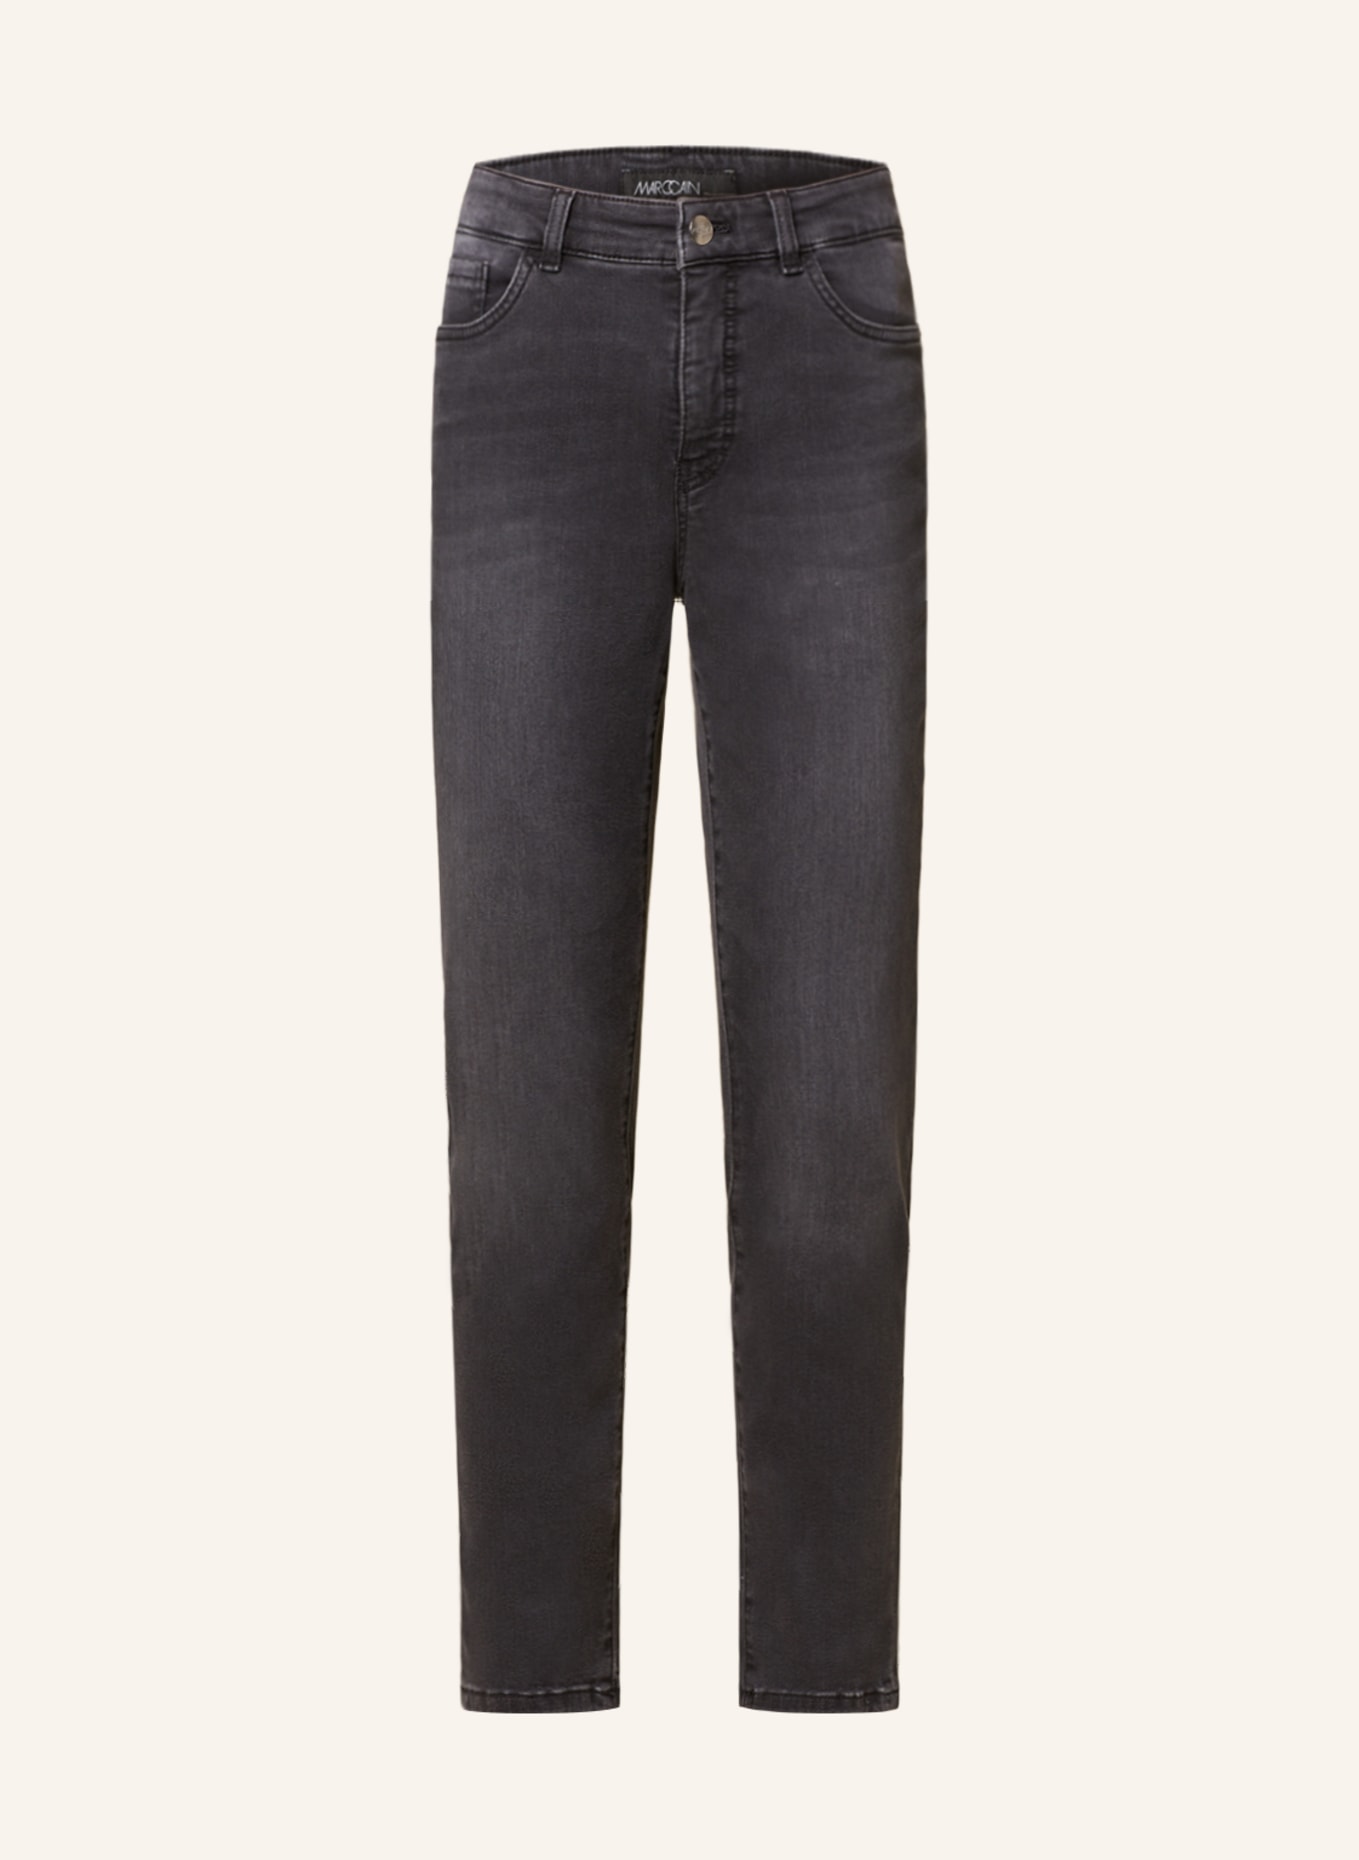 MARC CAIN Jeans SILEA, Farbe: 880 anthrazit (Bild 1)